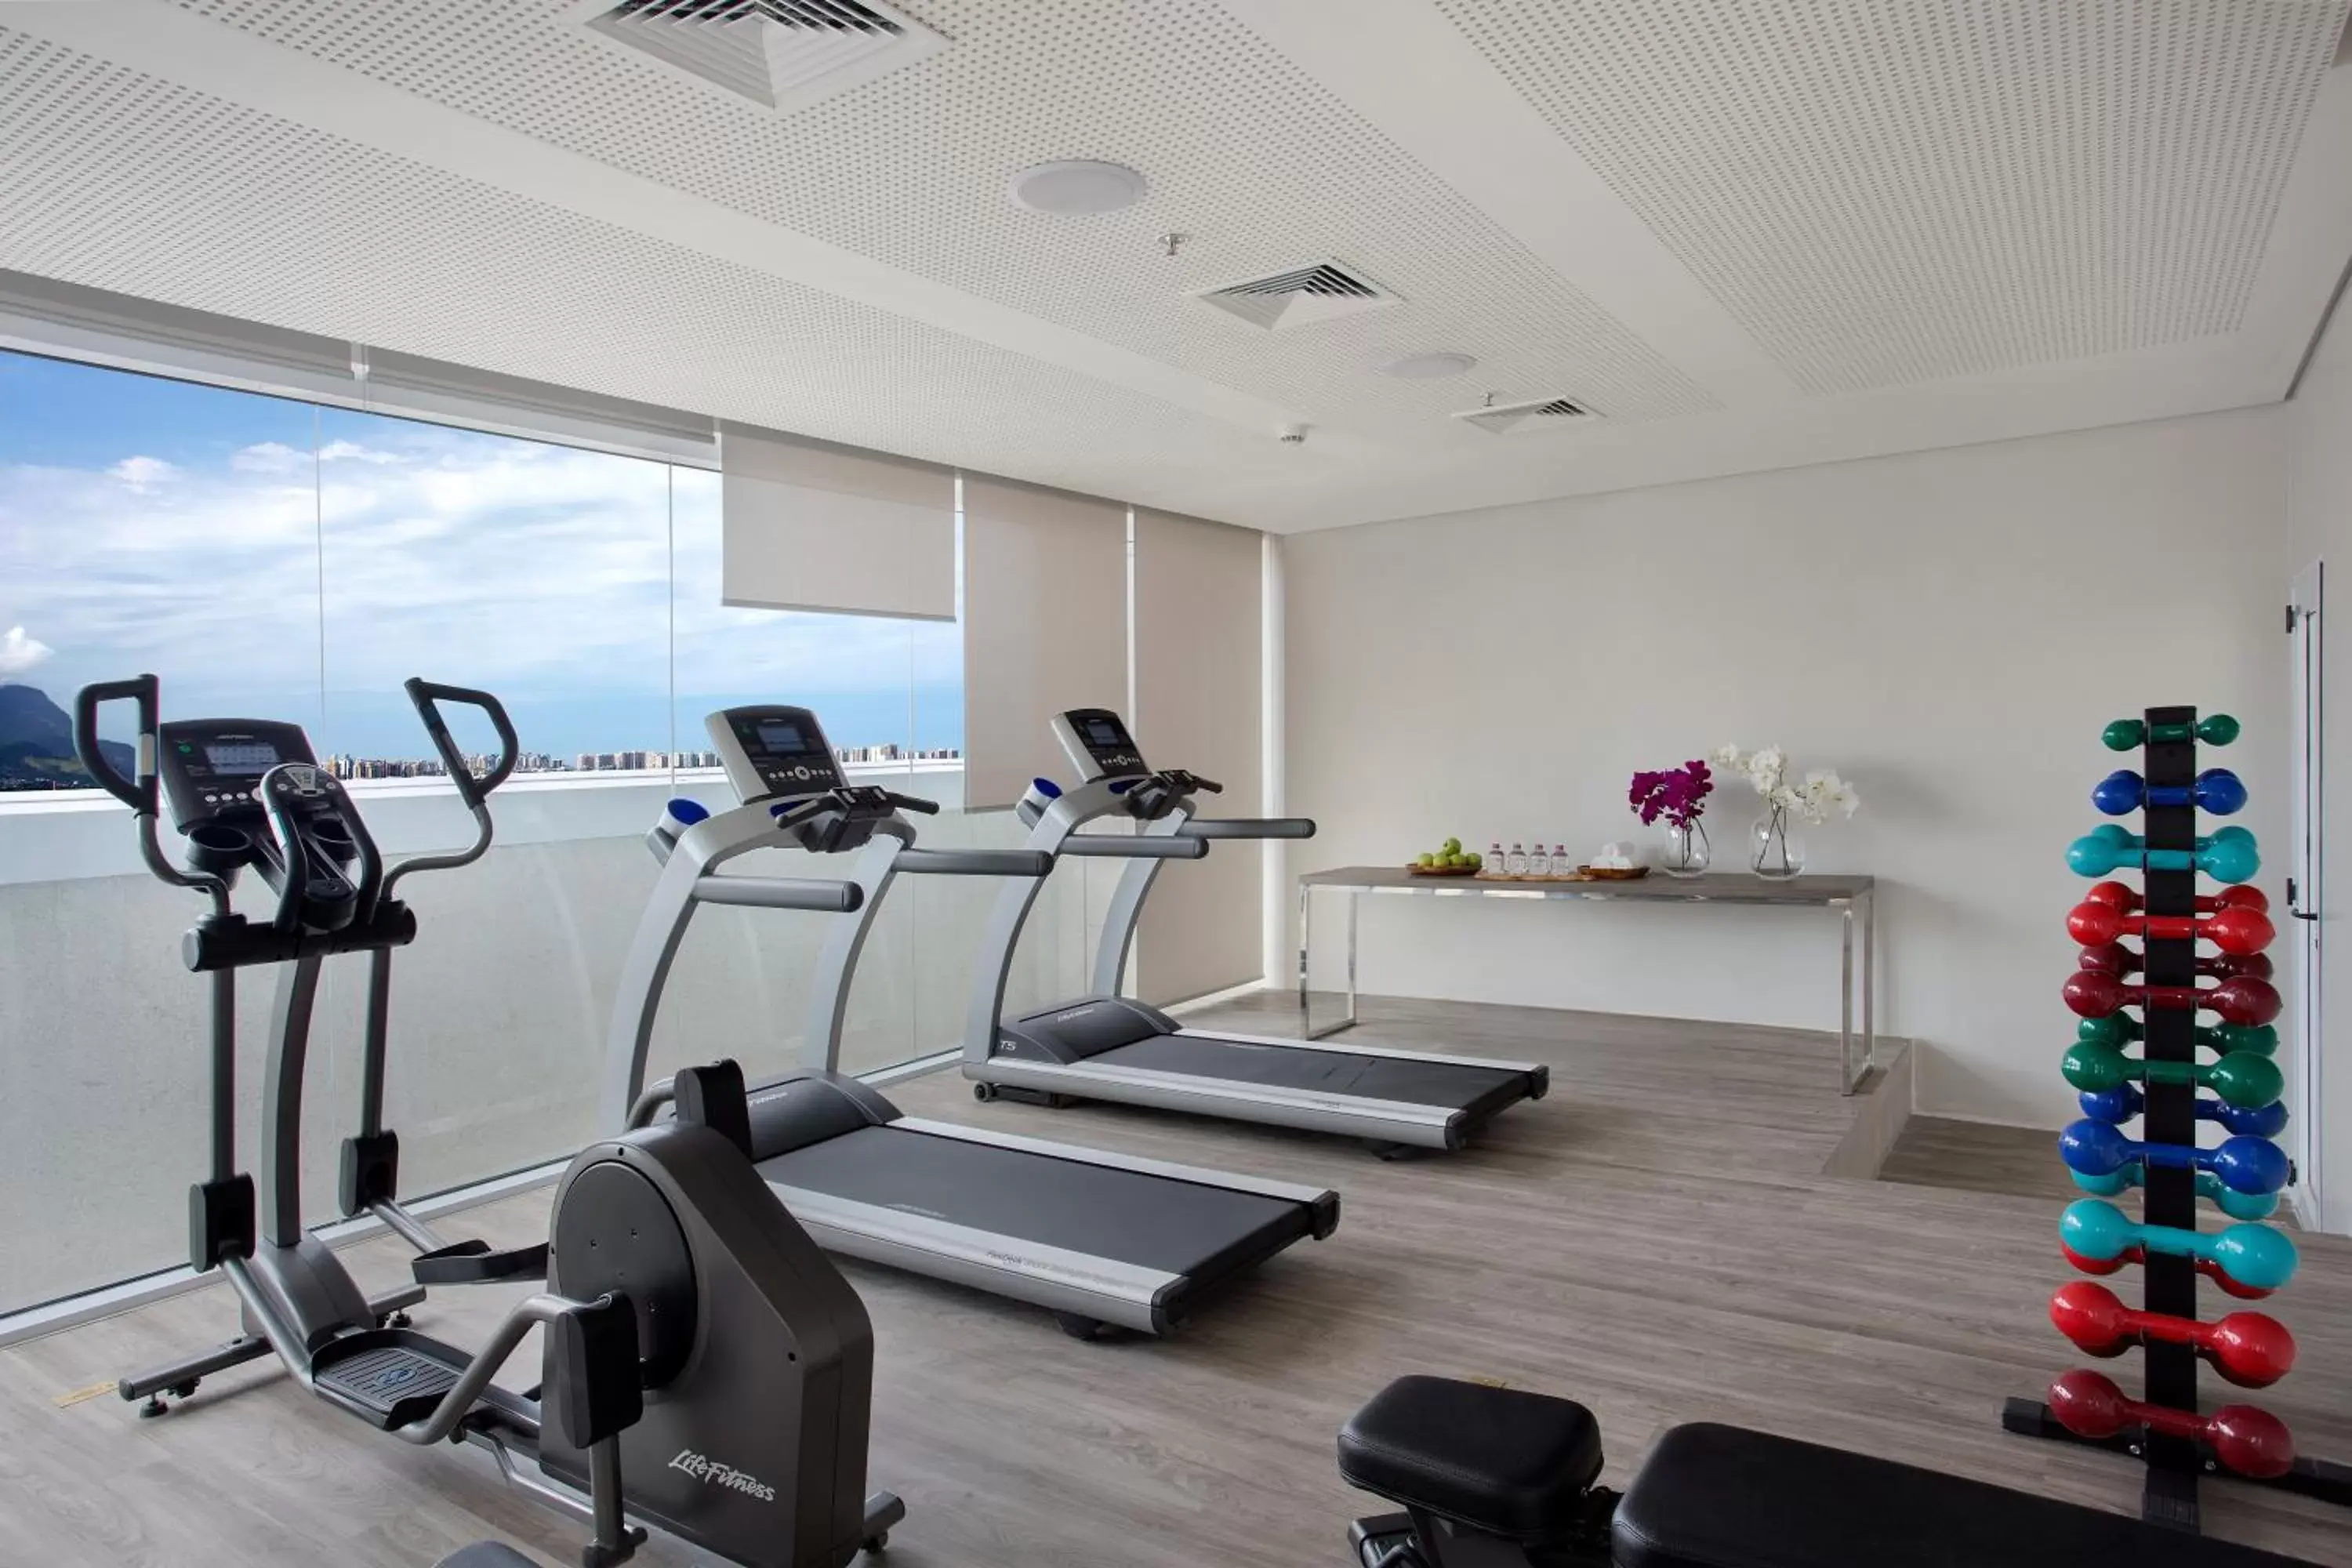 Fitness centre/facilities, Fitness Center/Facilities in Venit Mio Hotel